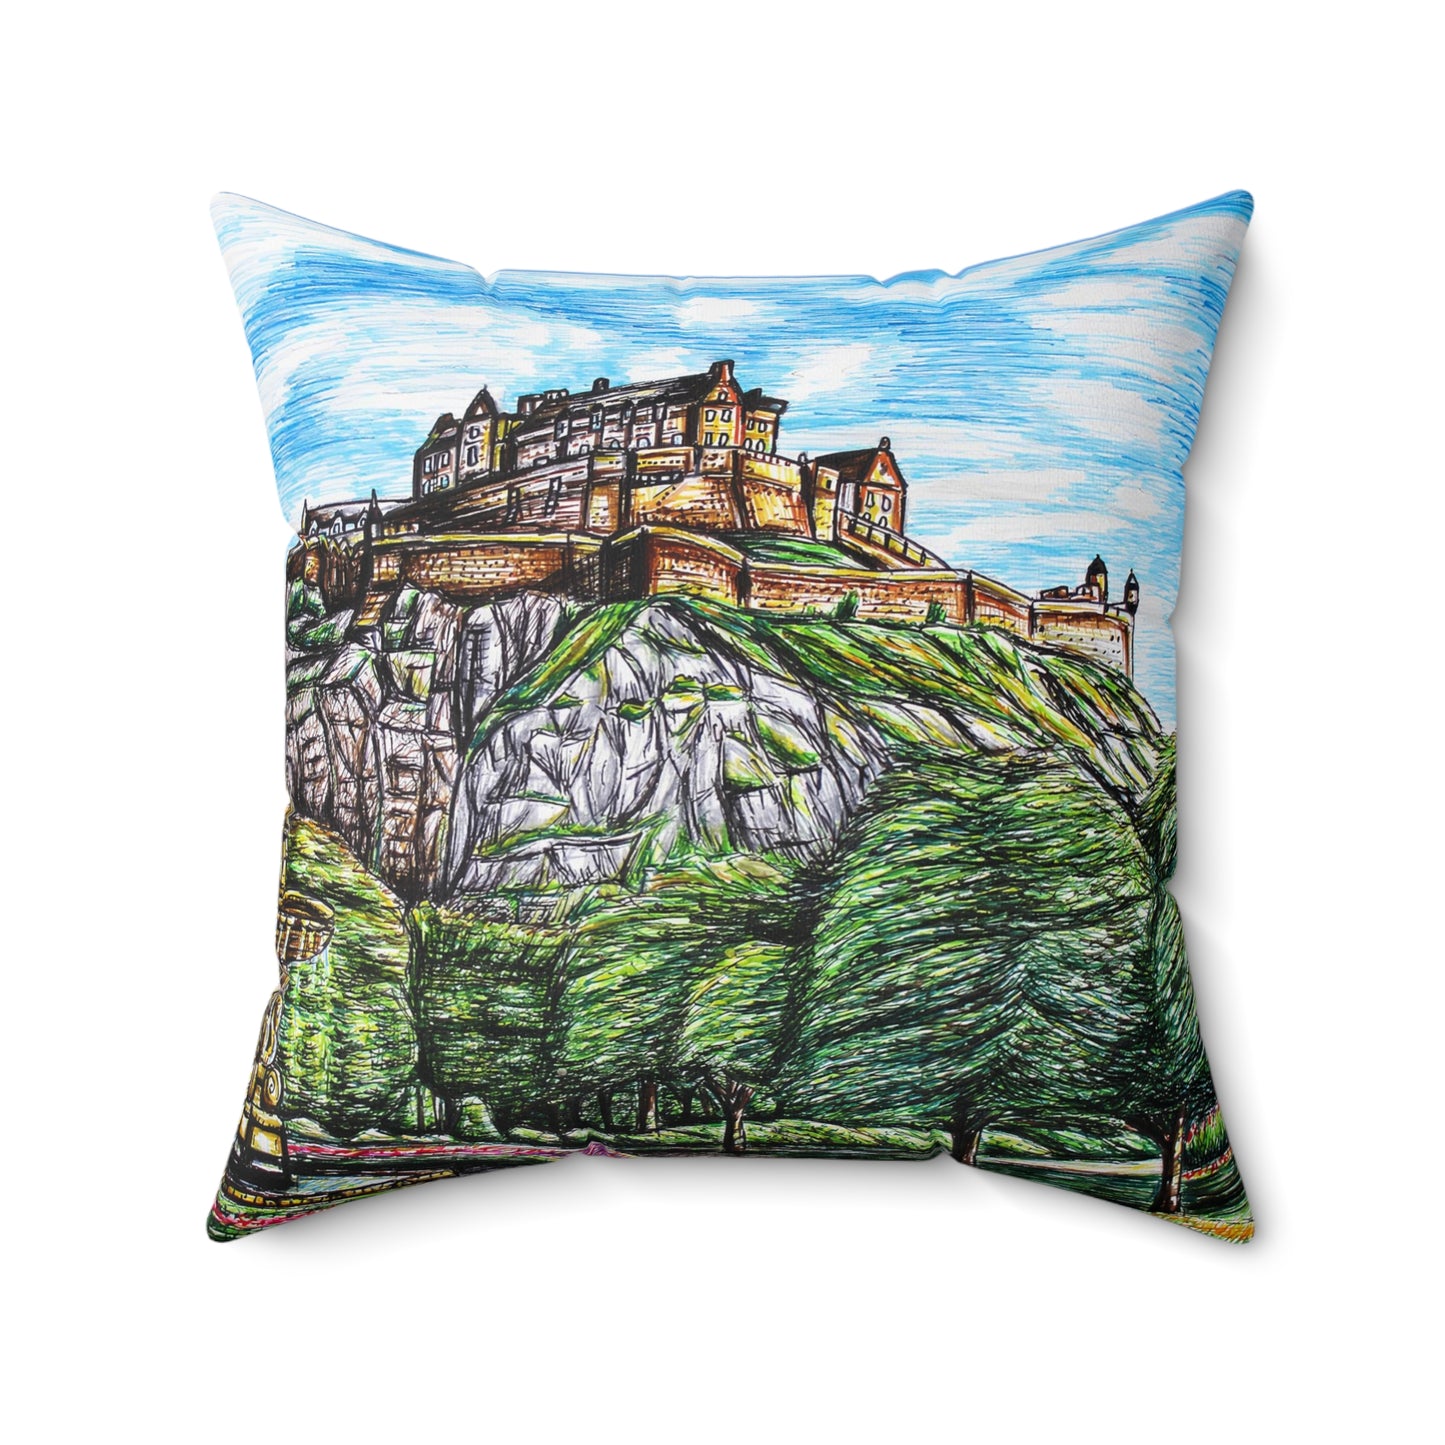 Indoor decorative Cushion- Edinburgh Castle